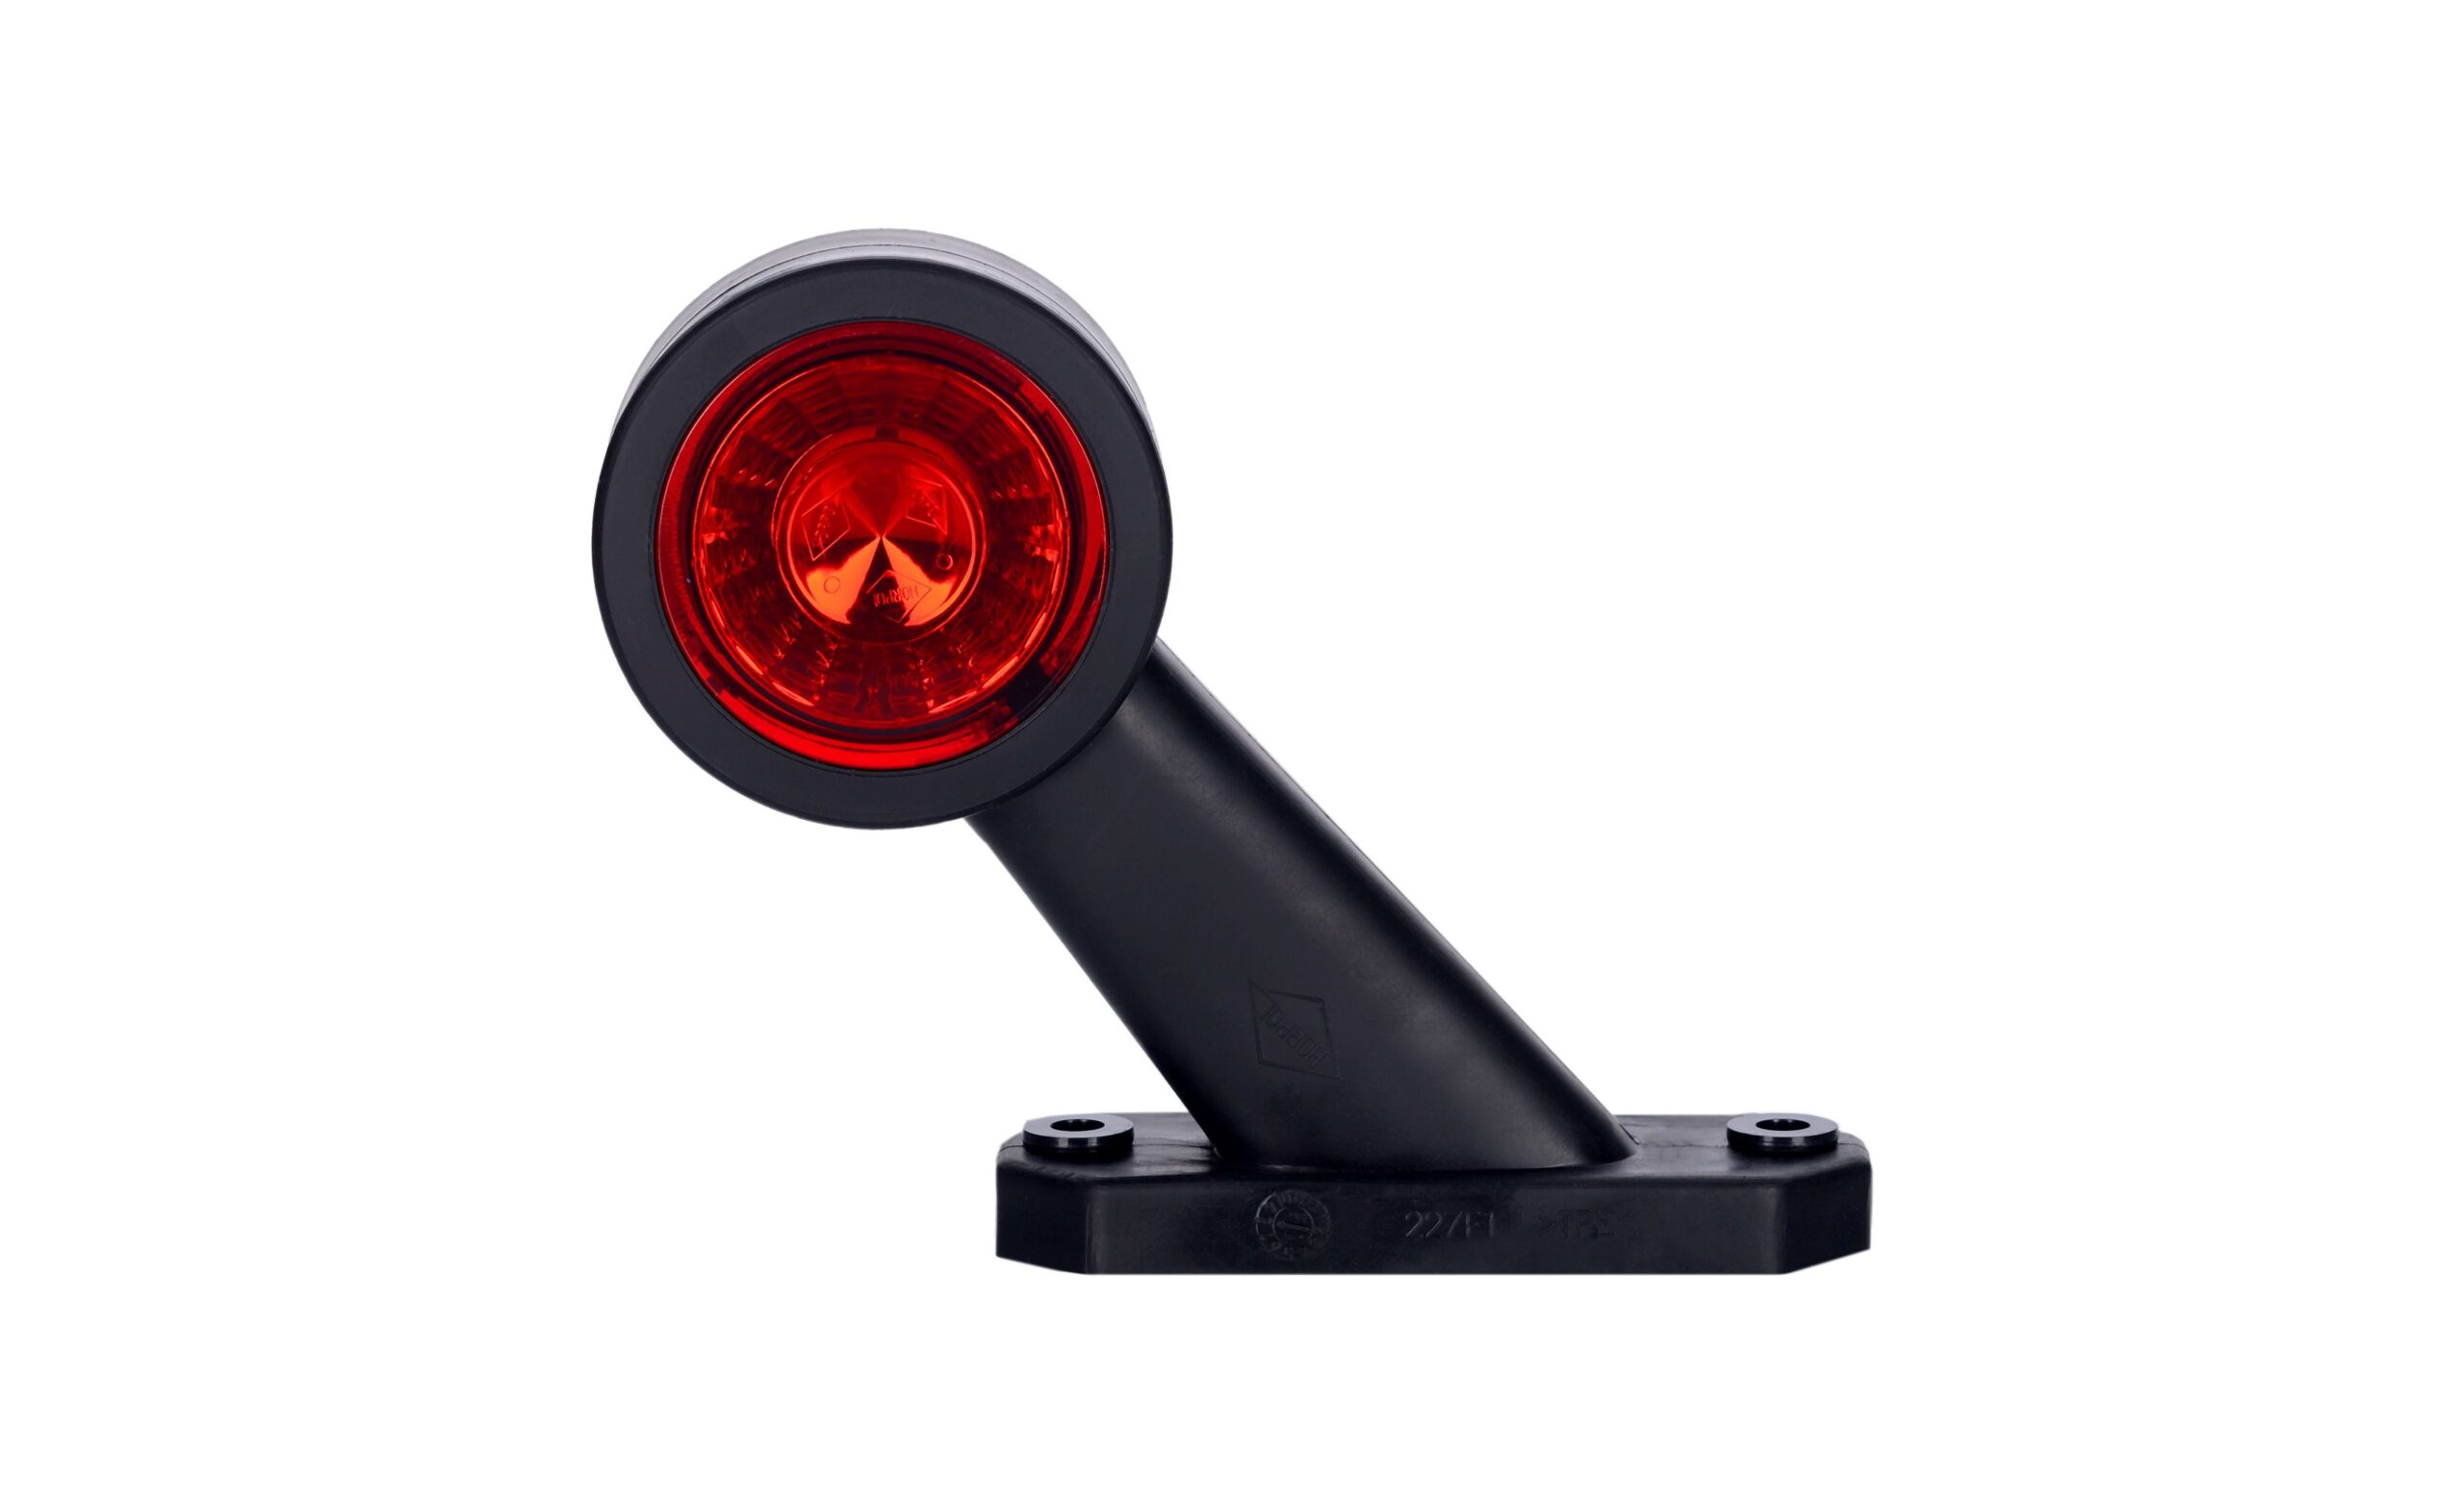 Lămpi de poziție și marcaj - Lampă gabarit rotundă Horpol cu braț oblic, marcaj dreapta, LED alb/roșu, alimentare 12/24V, fomcoshop.ro